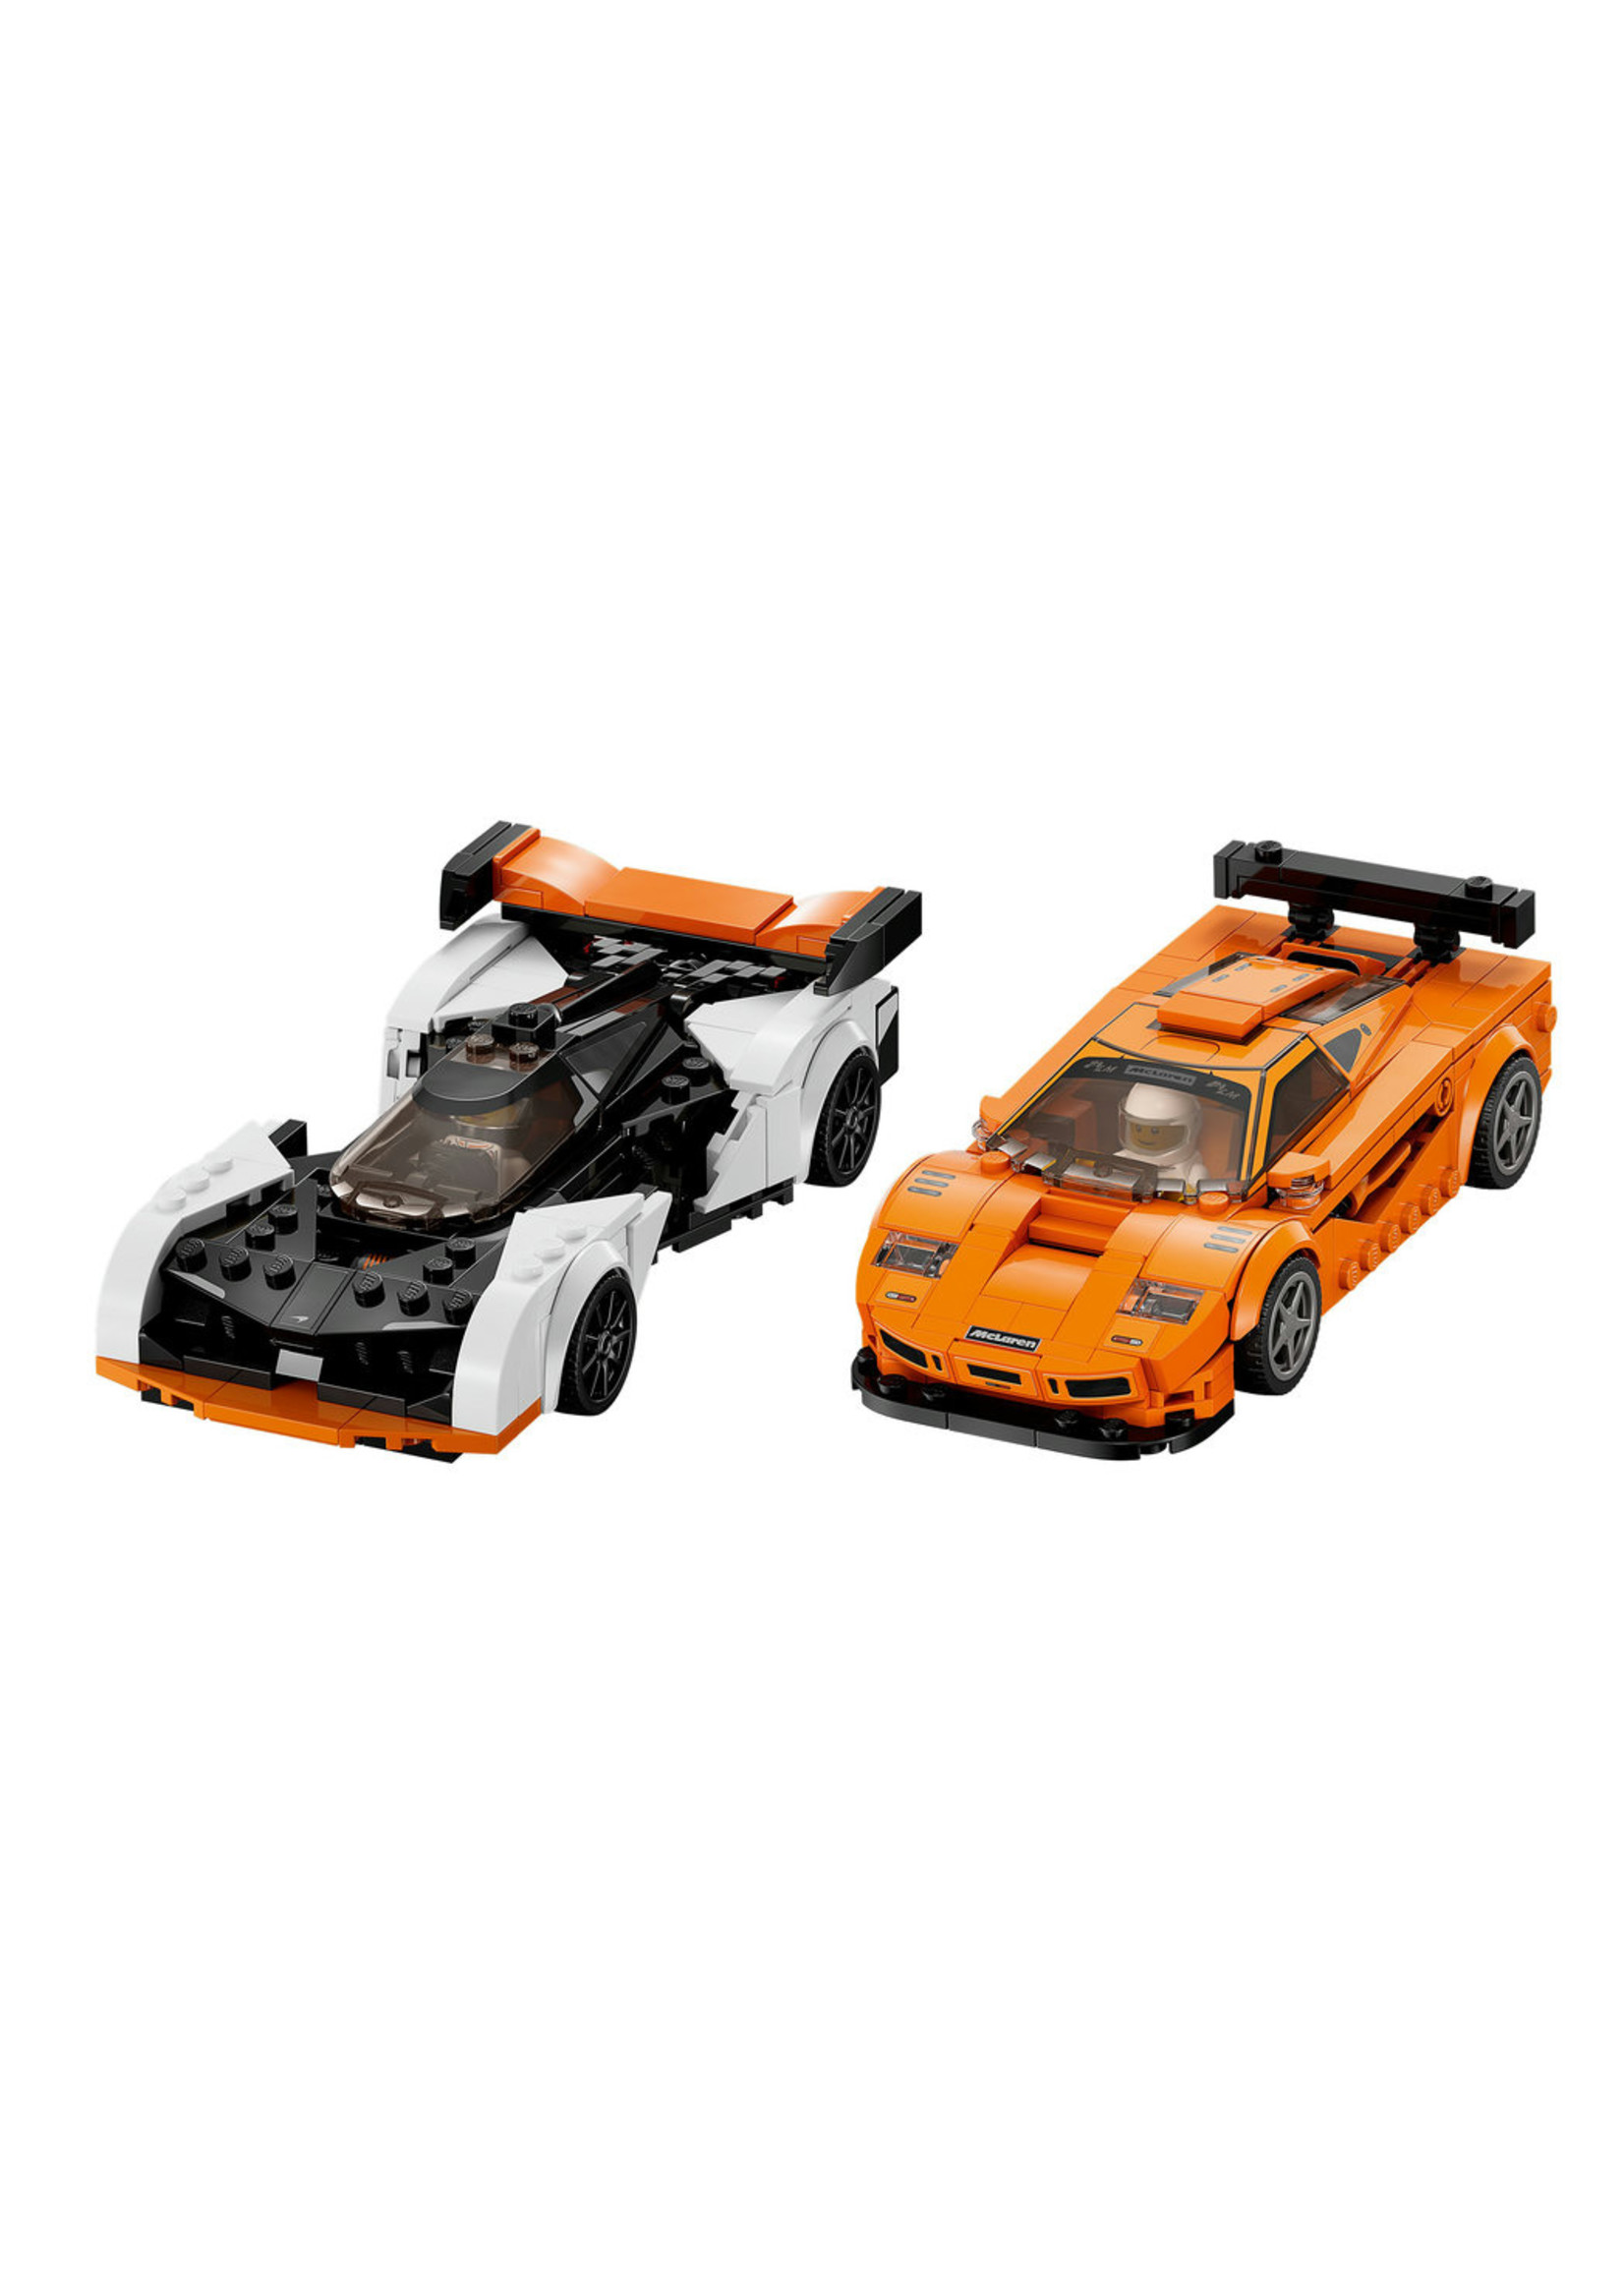 LEGO McLaren Solus GT & McLaren F1 LM Set 76918 Instructions